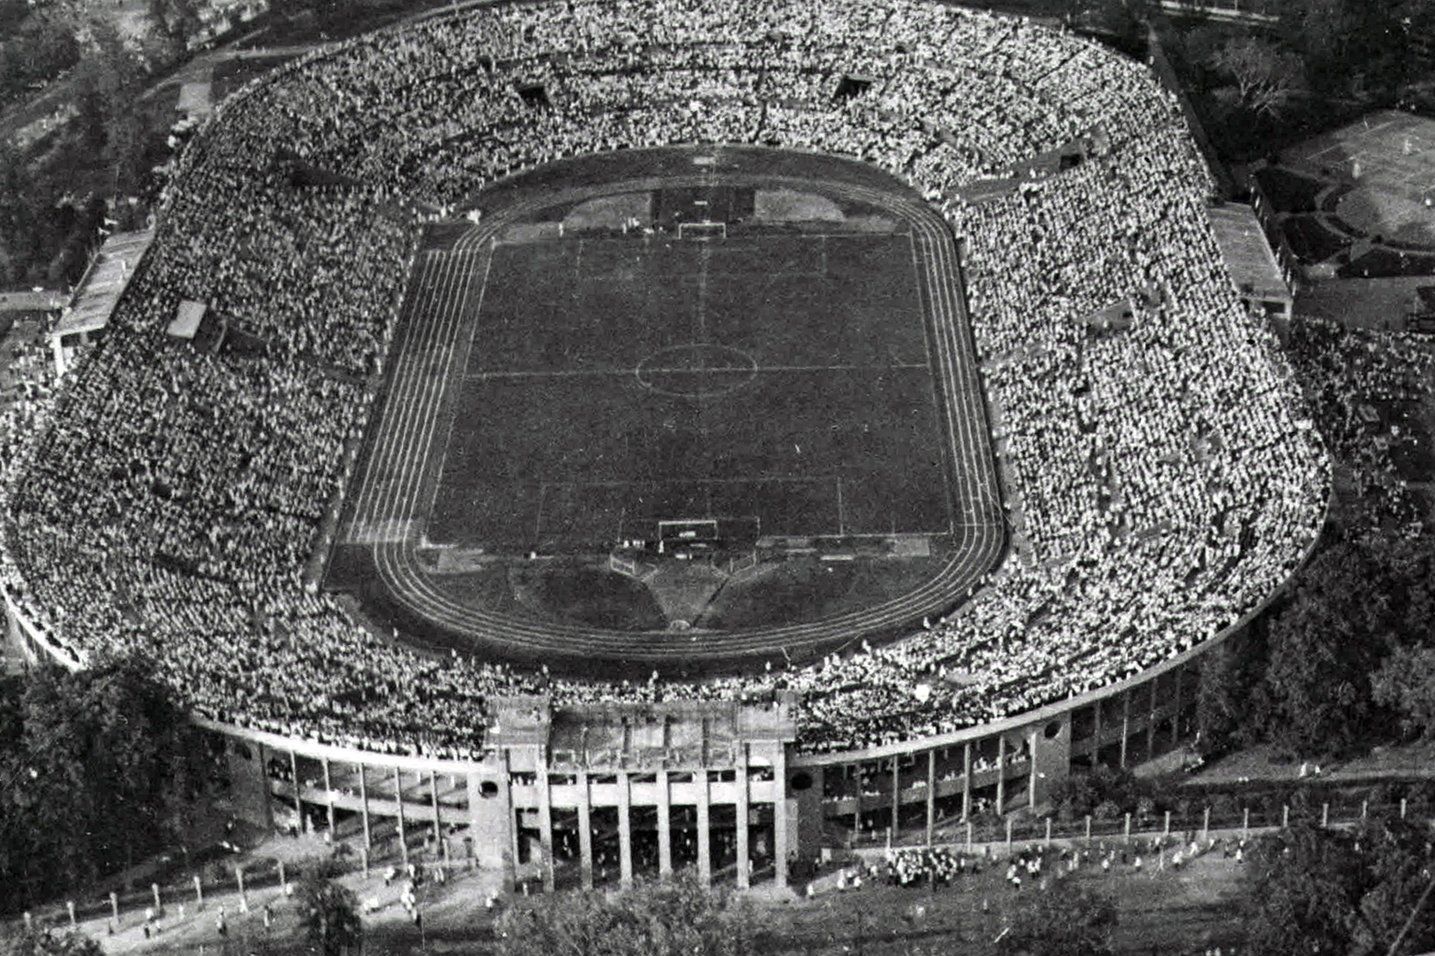 Вид с самолета на стадион «Динамо» во время футбольного матча. Автор неизвестен. 25 апреля 1950 года